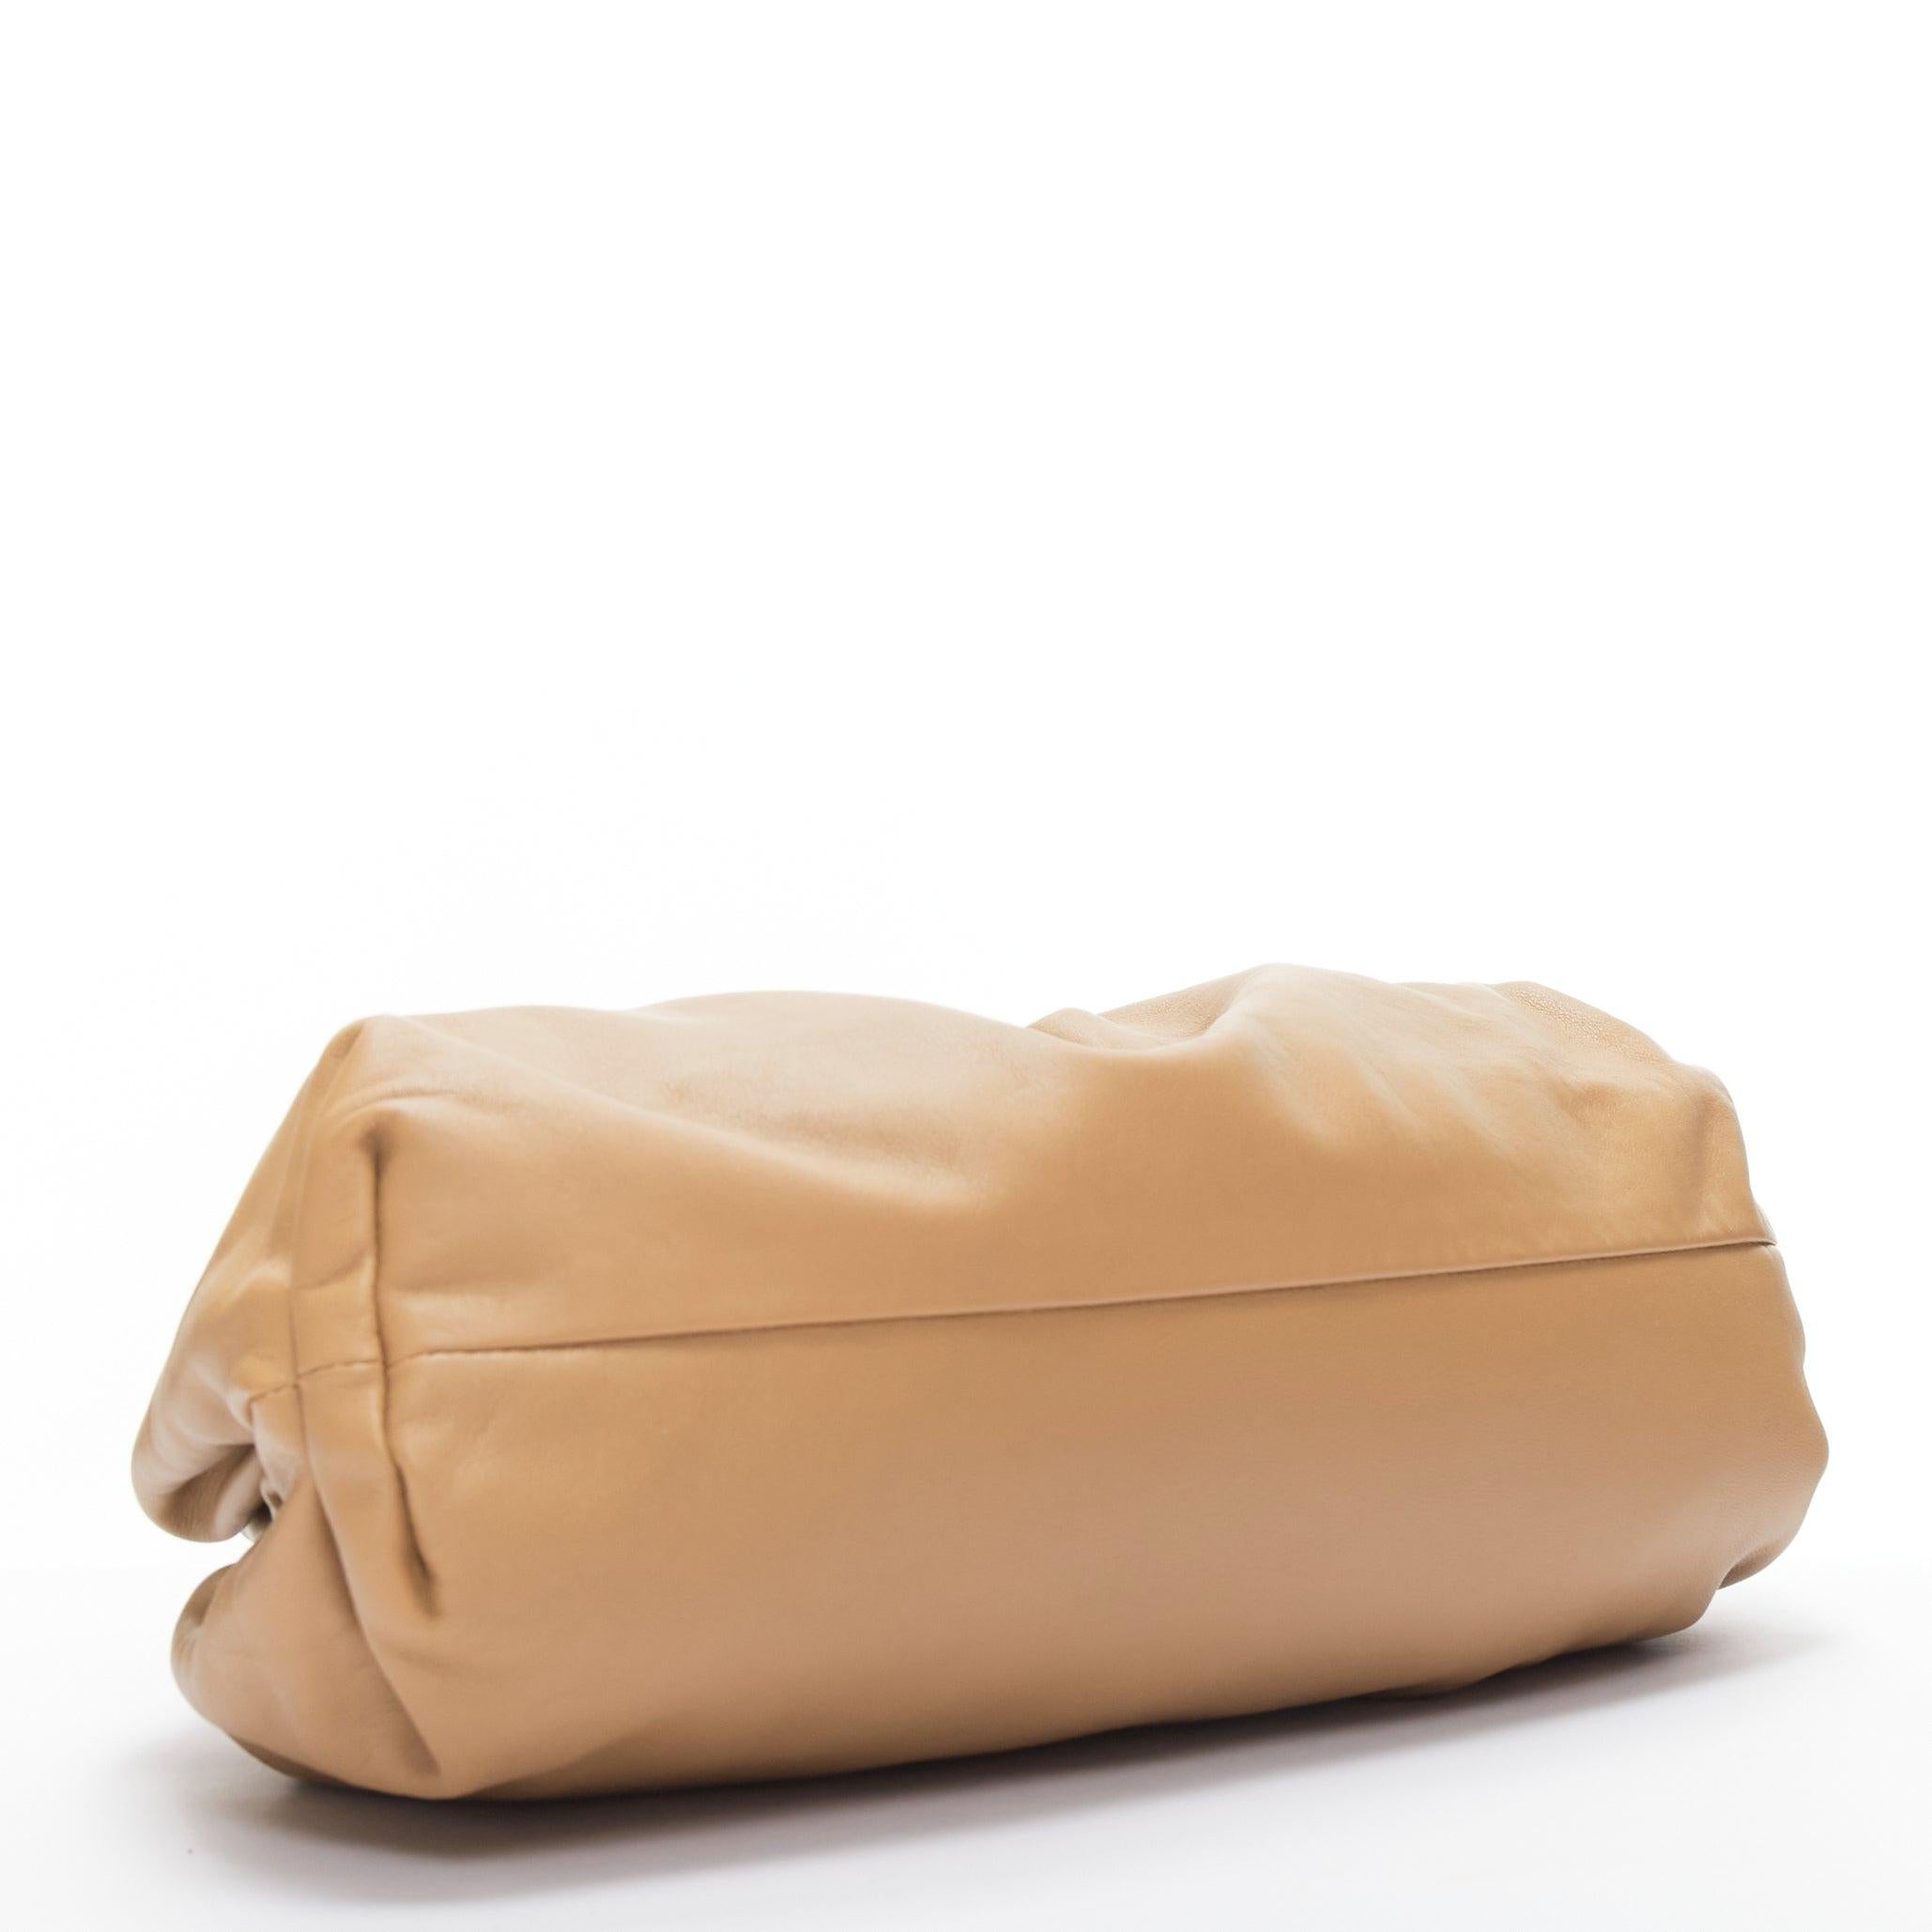 BOTTEGA VENETA The Pouch tan leather dumpling clutch bag For Sale 1